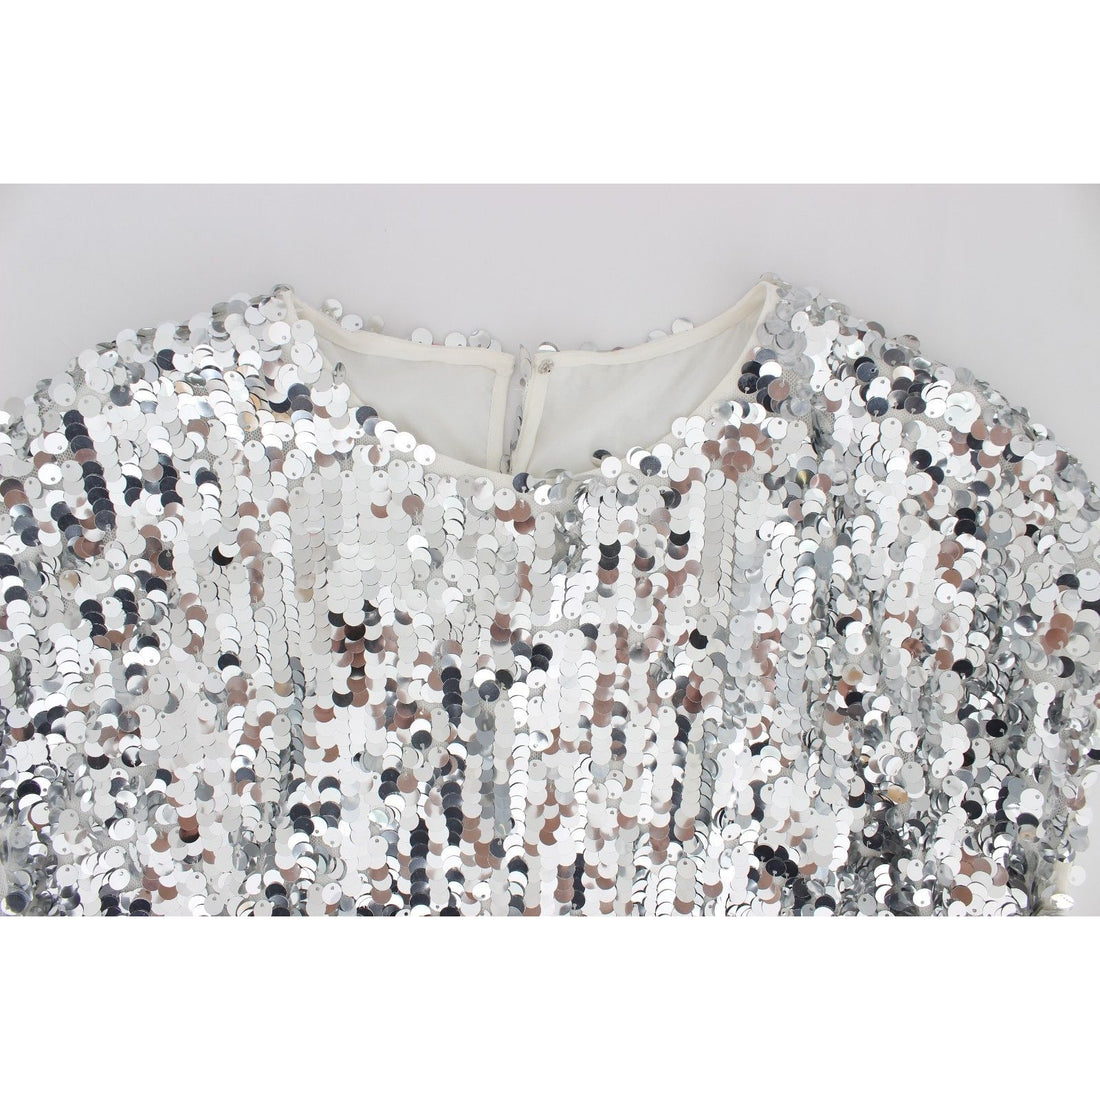 Dolce & Gabbana Silver Sequined Crewneck Blouse T-shirt Top - Paris Deluxe